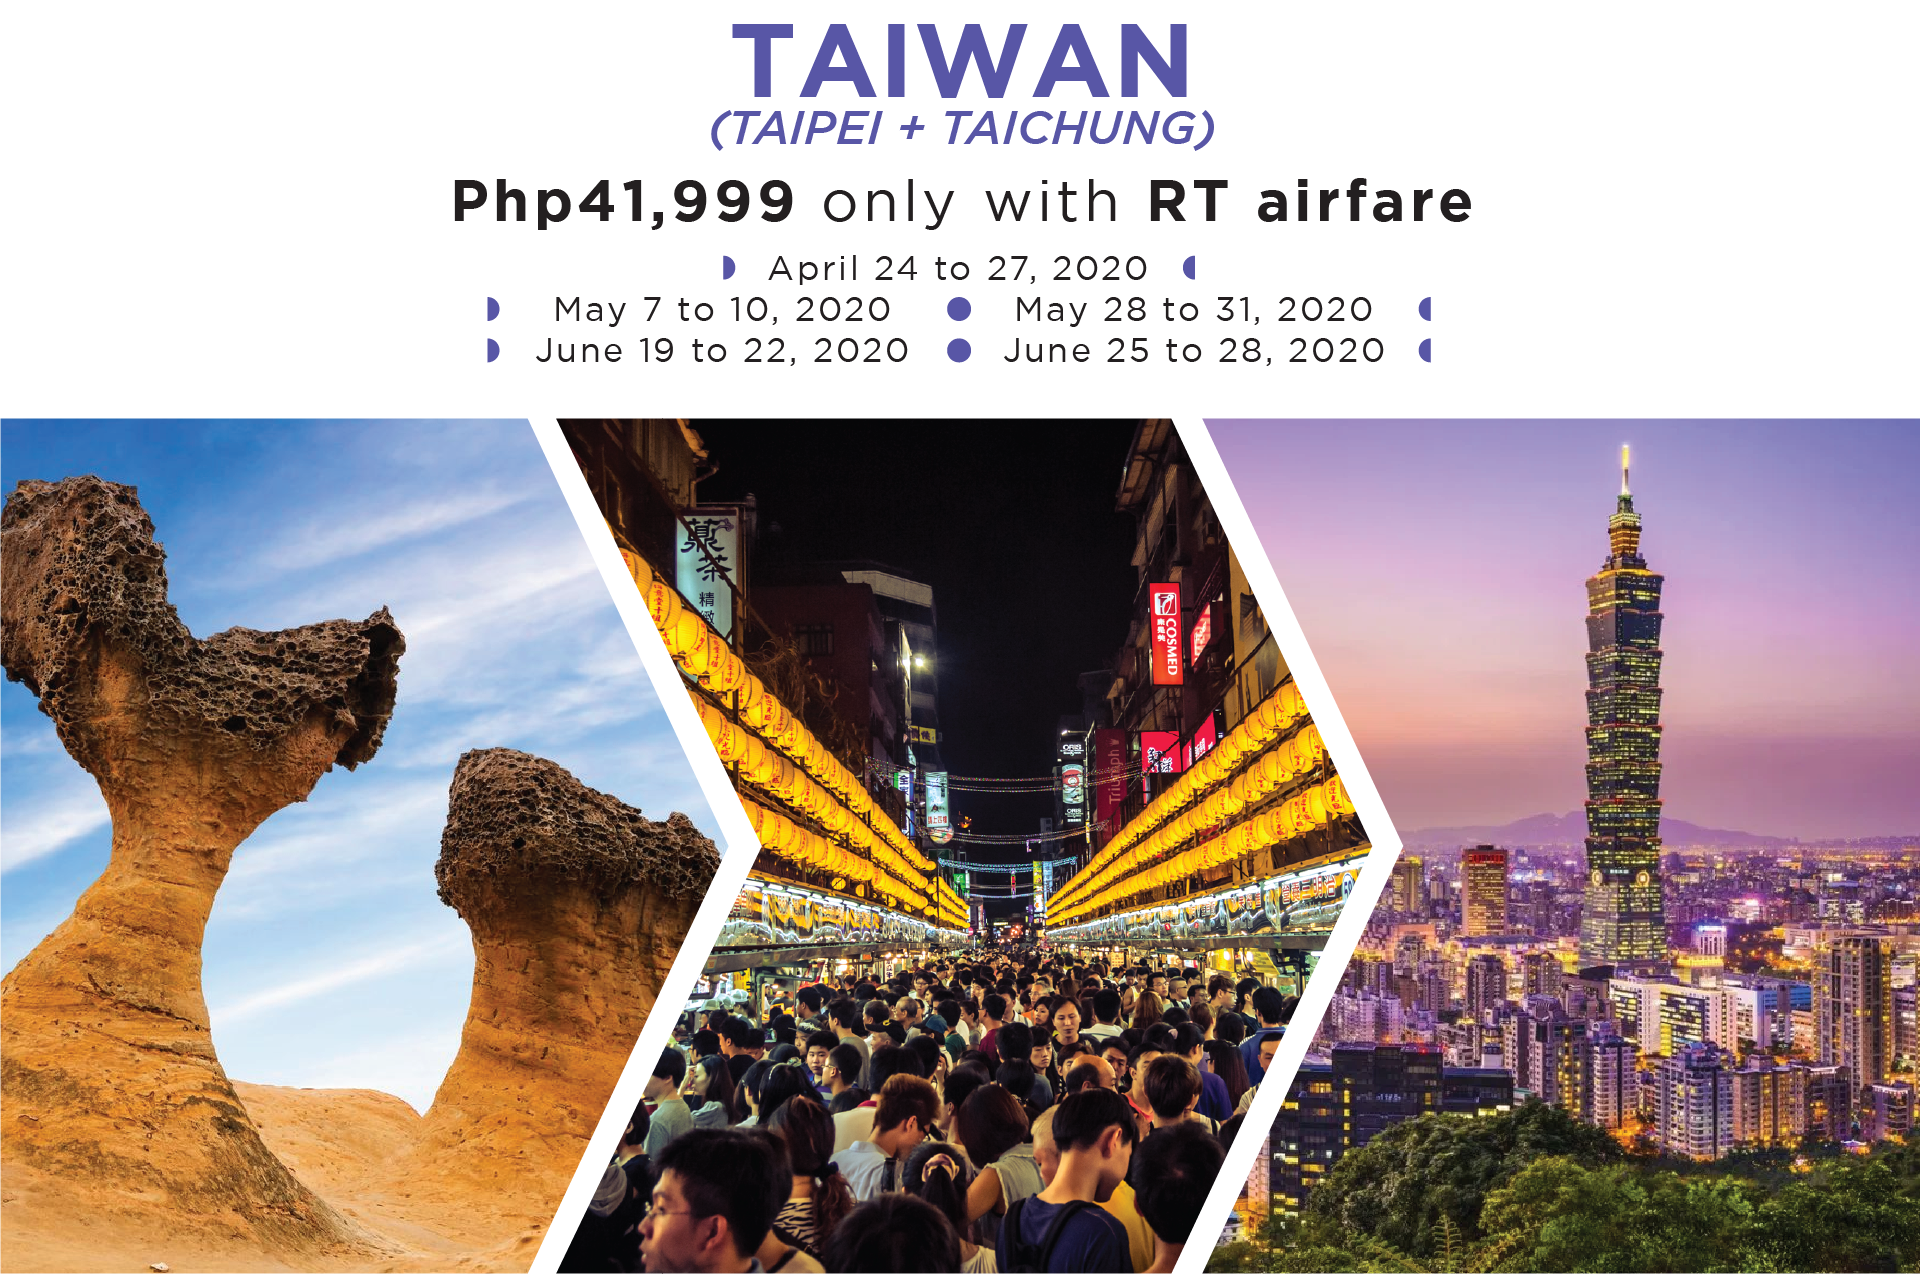 Taipei and Taichung, Taiwan